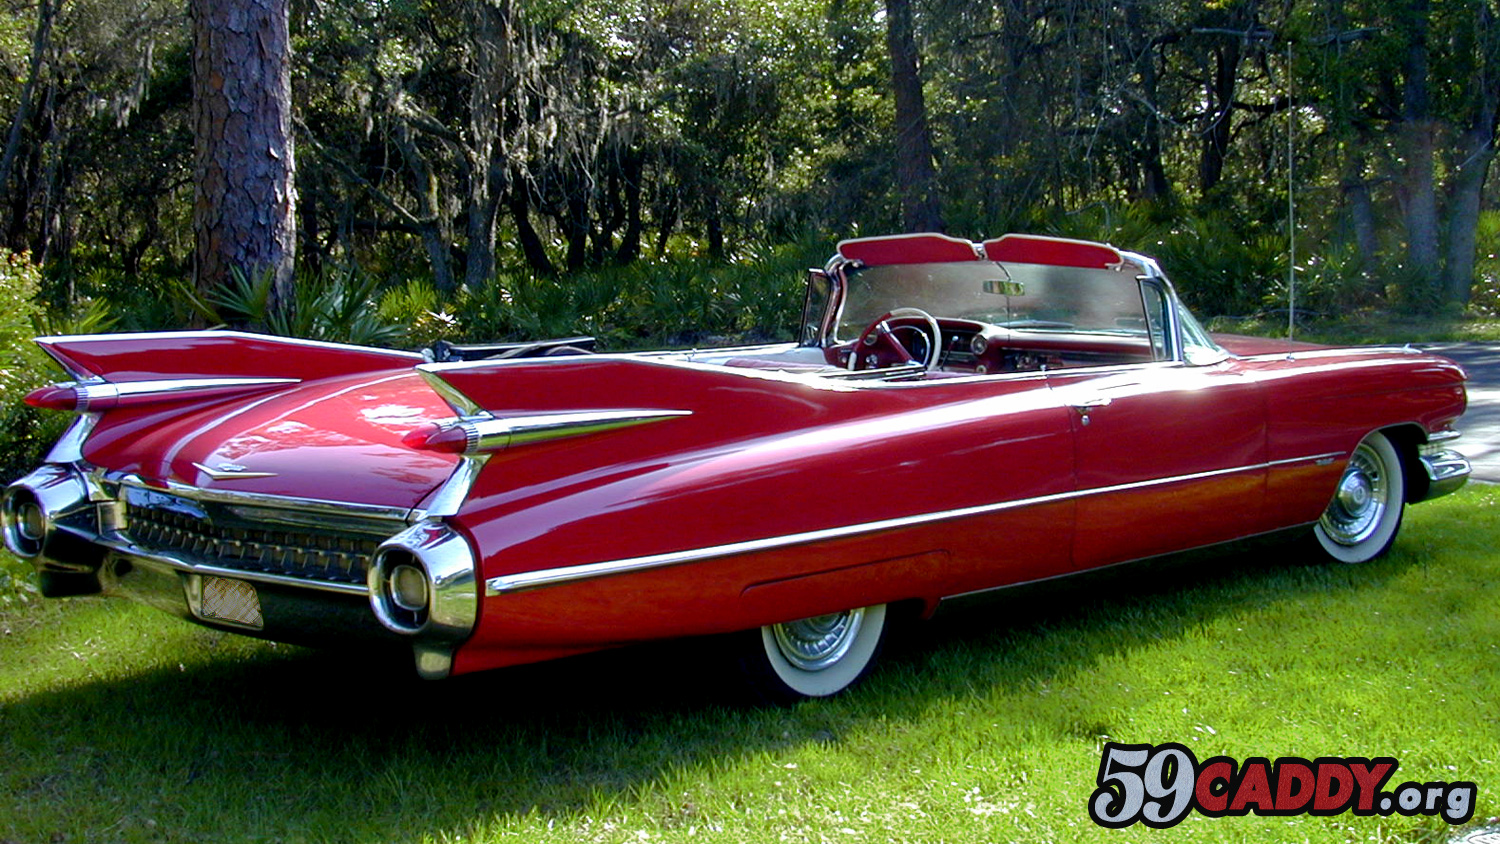 1959-cadillac-convertible-59-caddy-classic-cars-1959-cadillac-eldorado